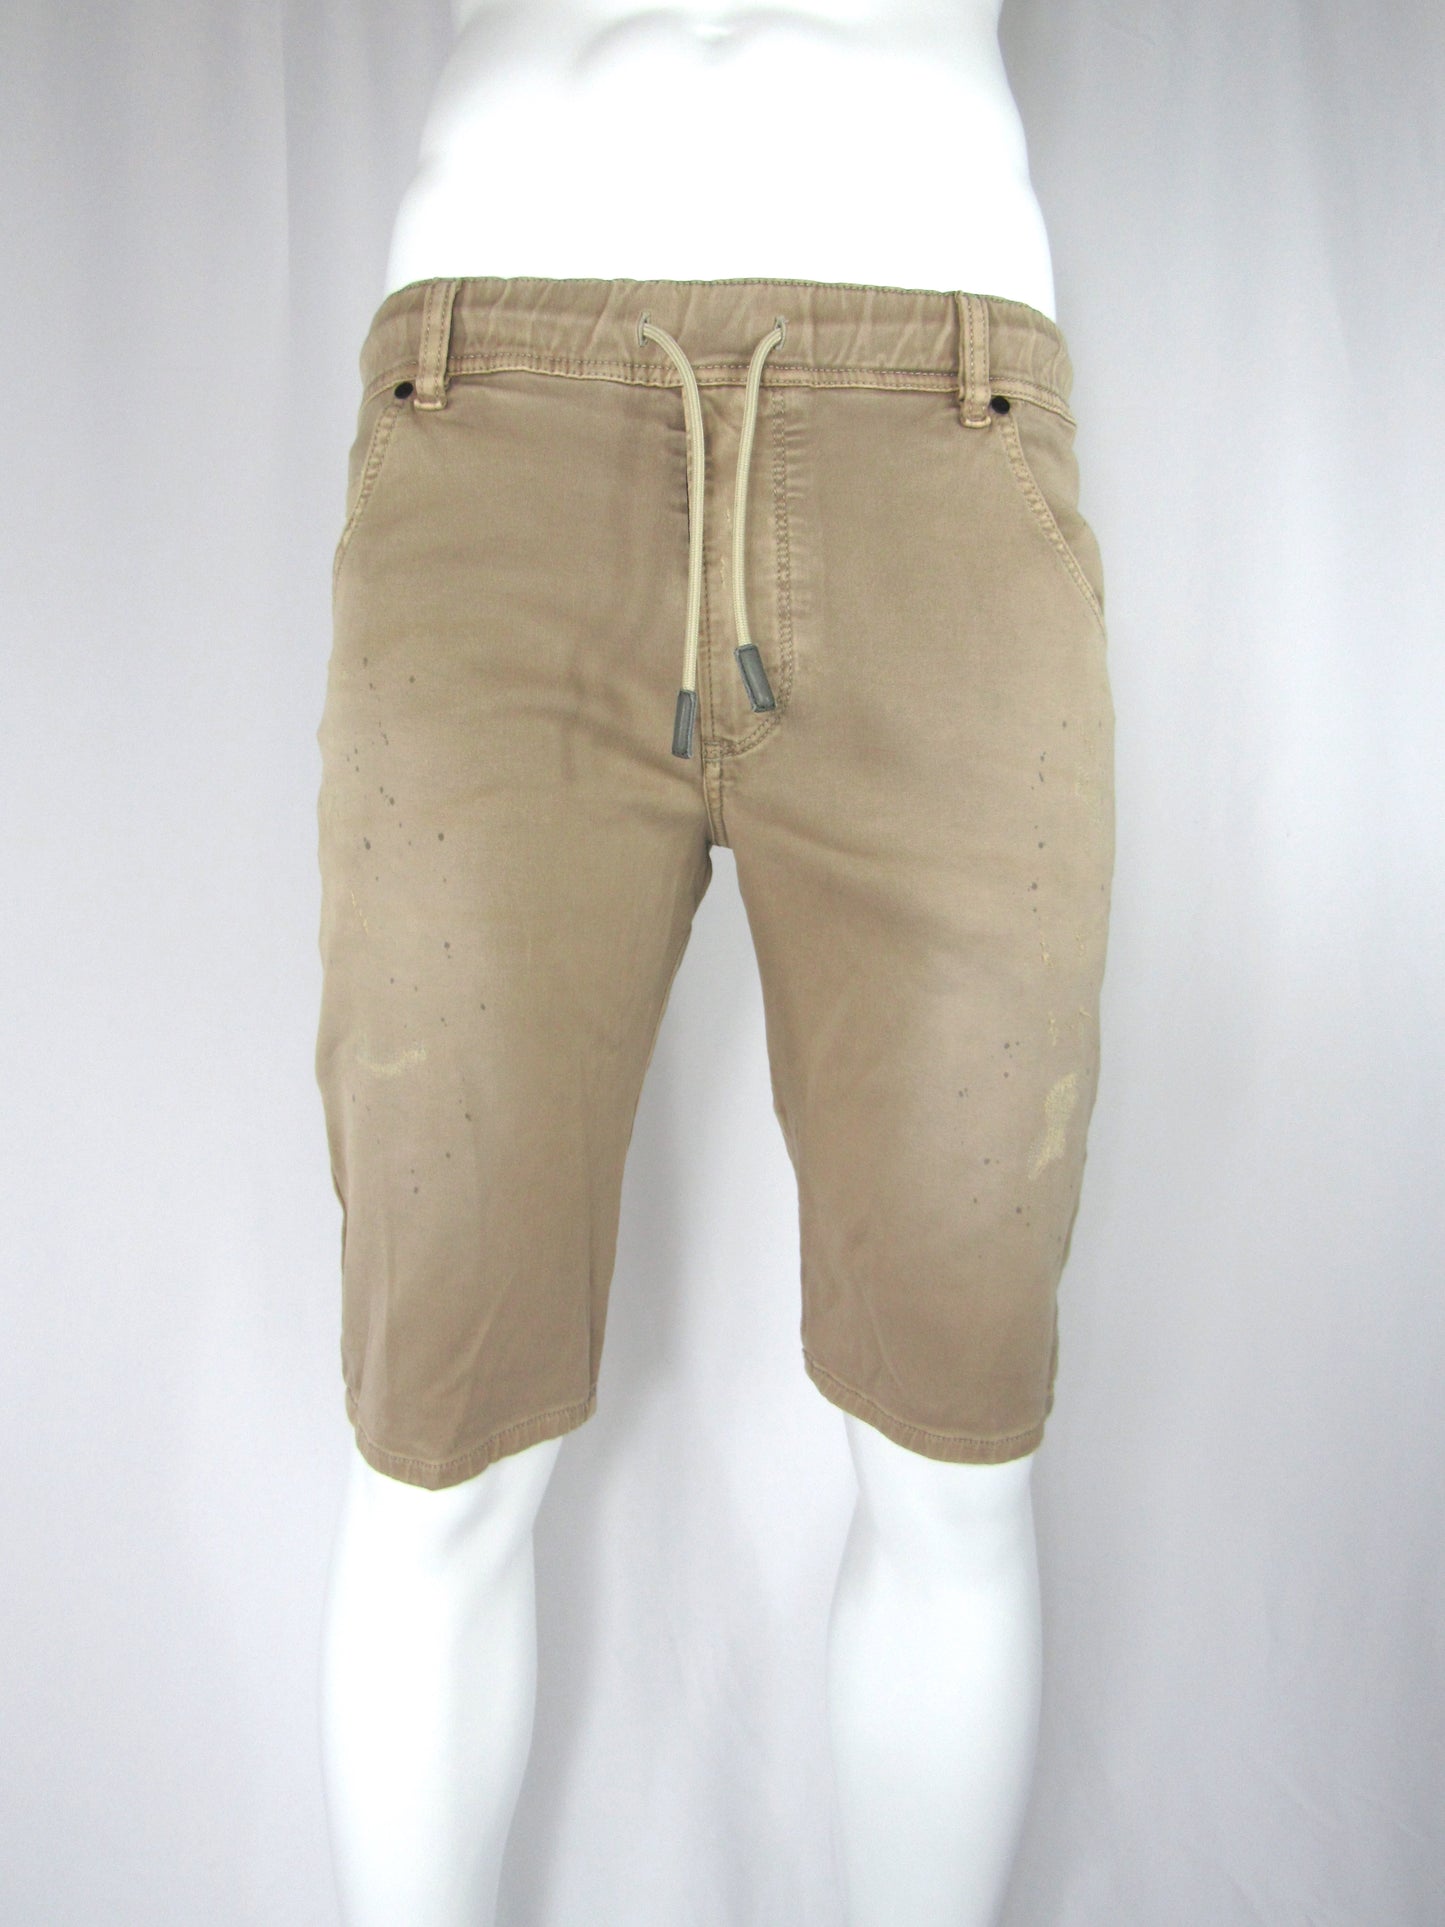 DIESEL Khaki Stretch Denim Shorts - Size 32W